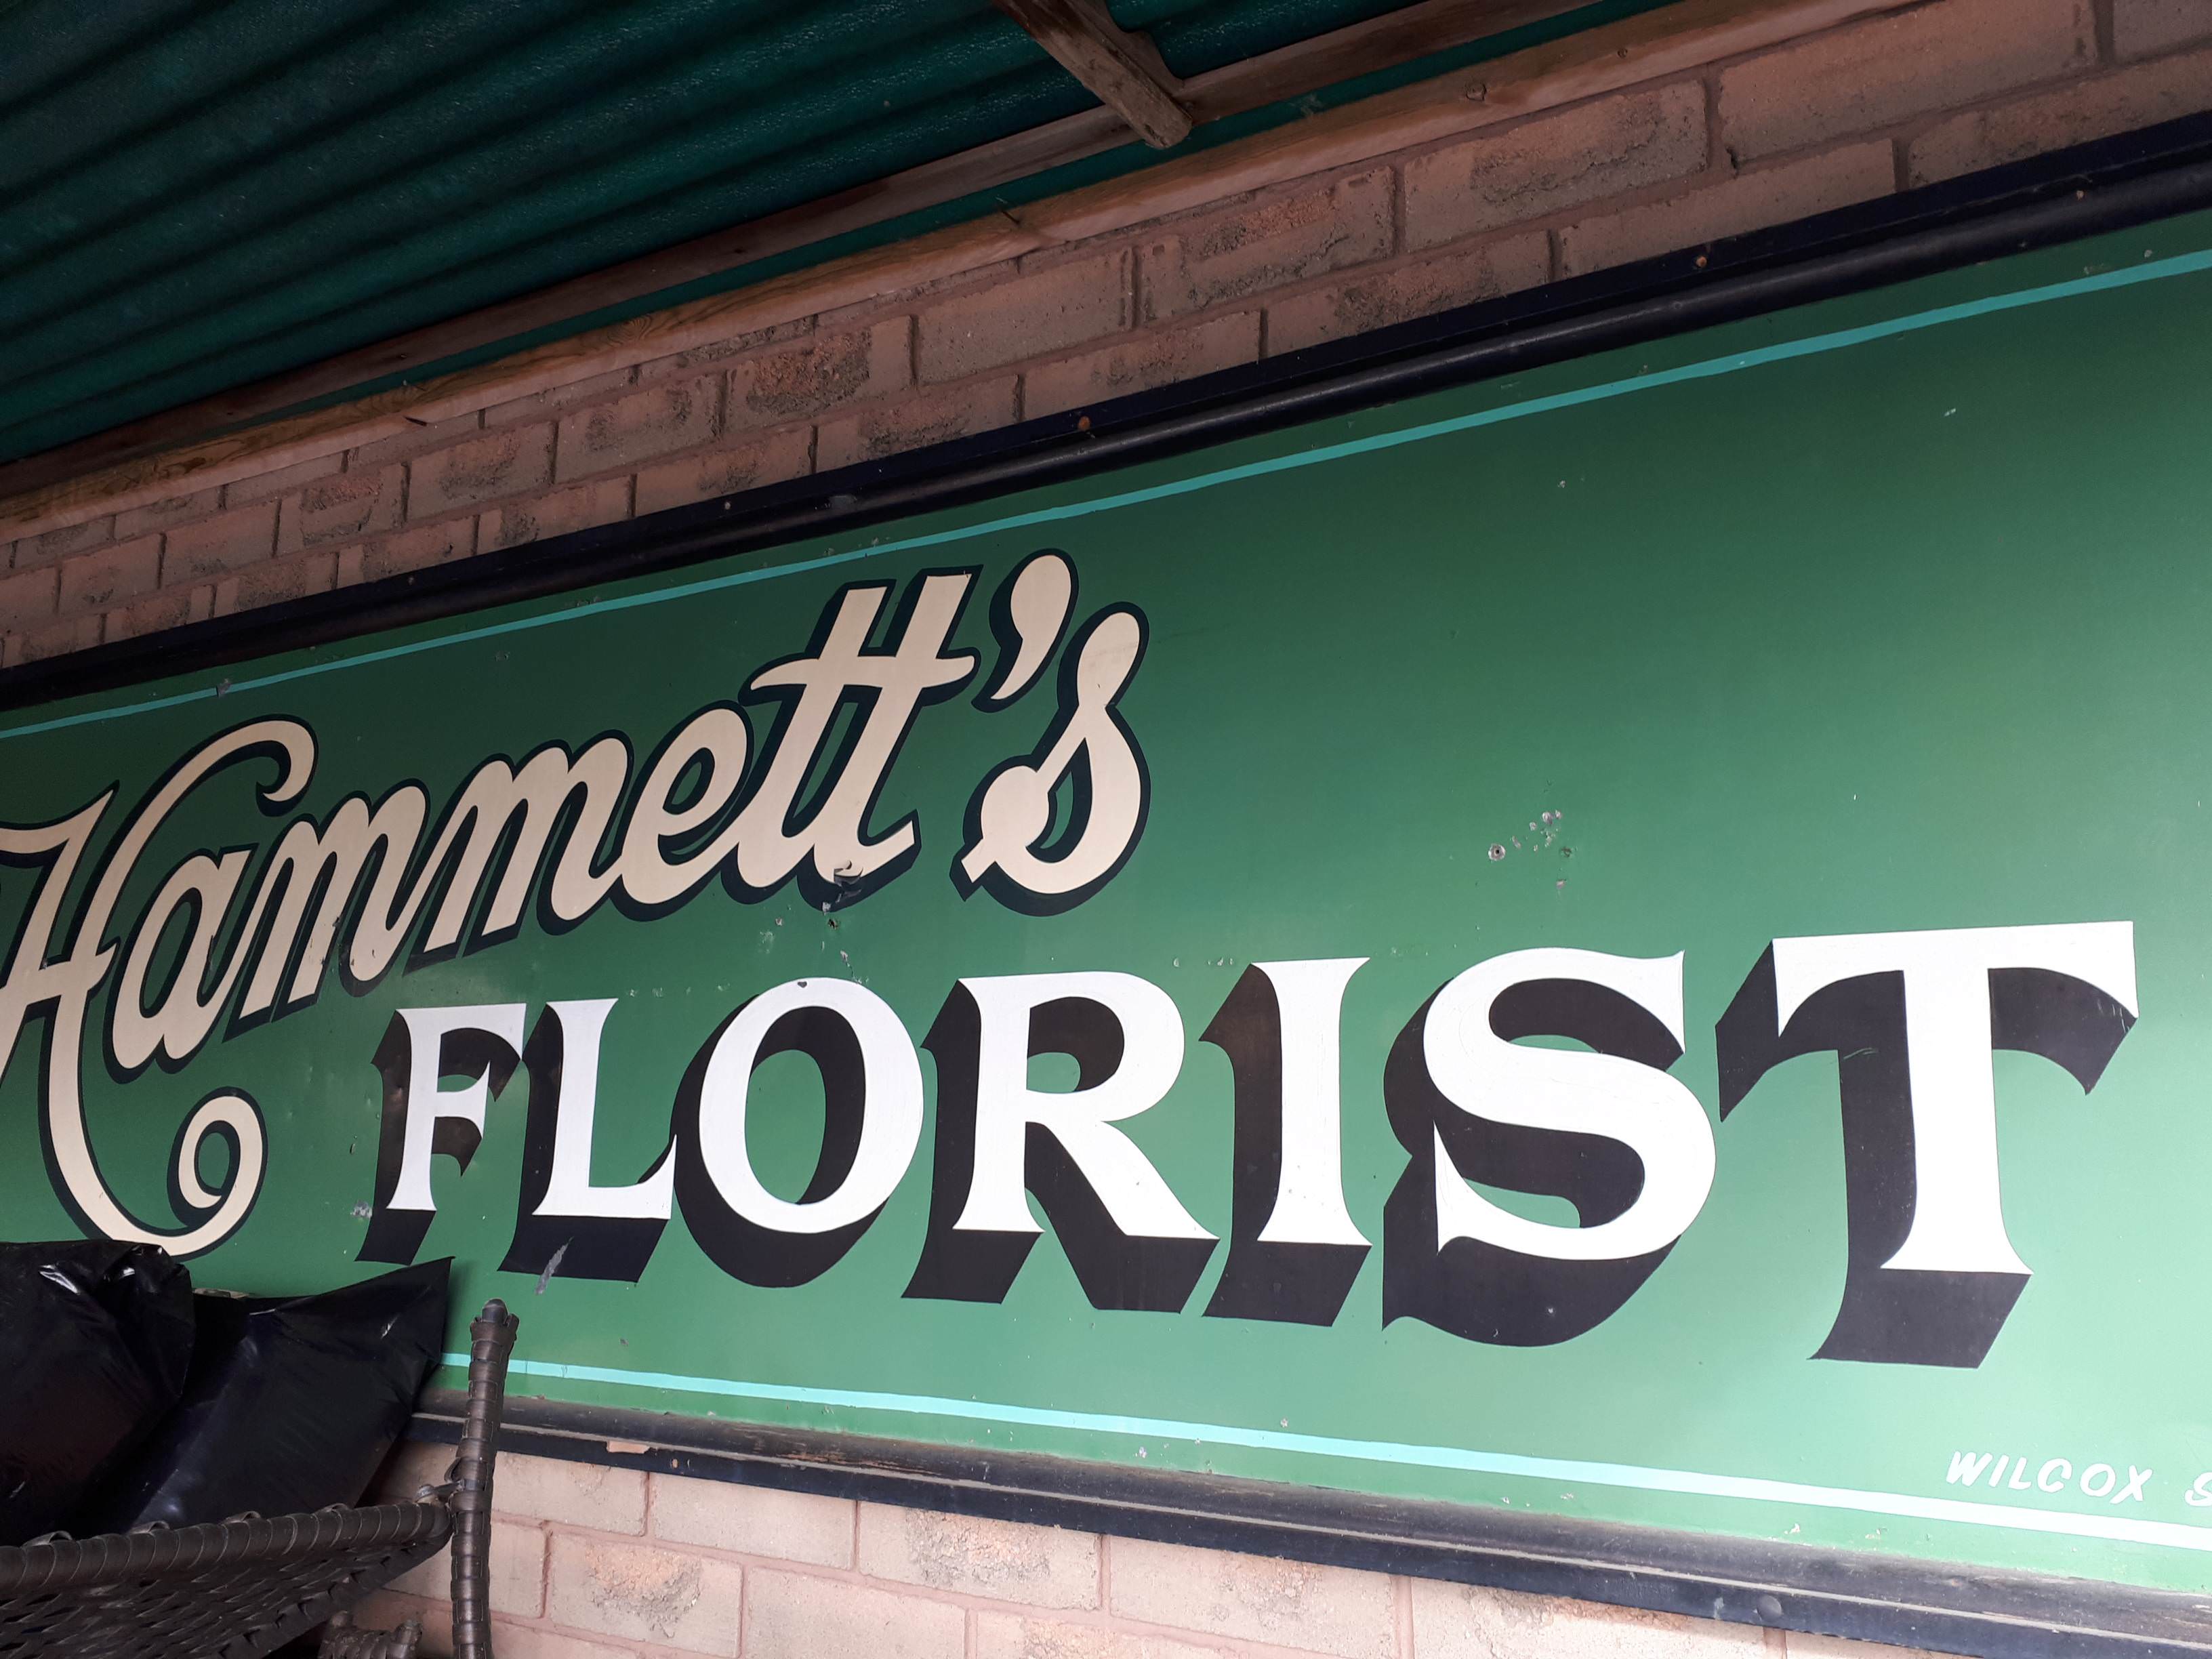 Hammetts Florists sign